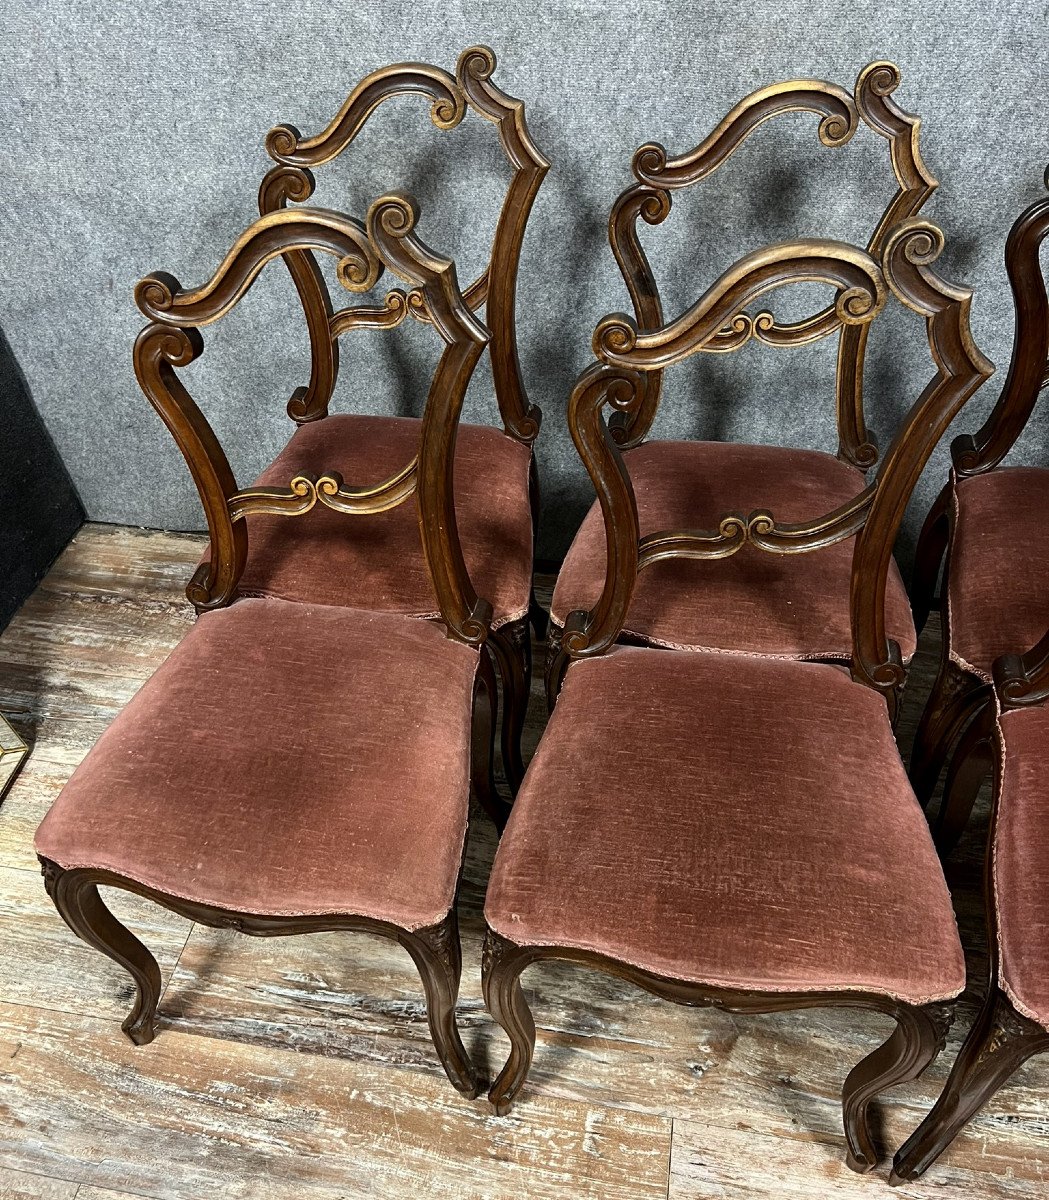 série de 8 chaises "clé de sol" style Louis XV Rocaille en noyer circa 1880